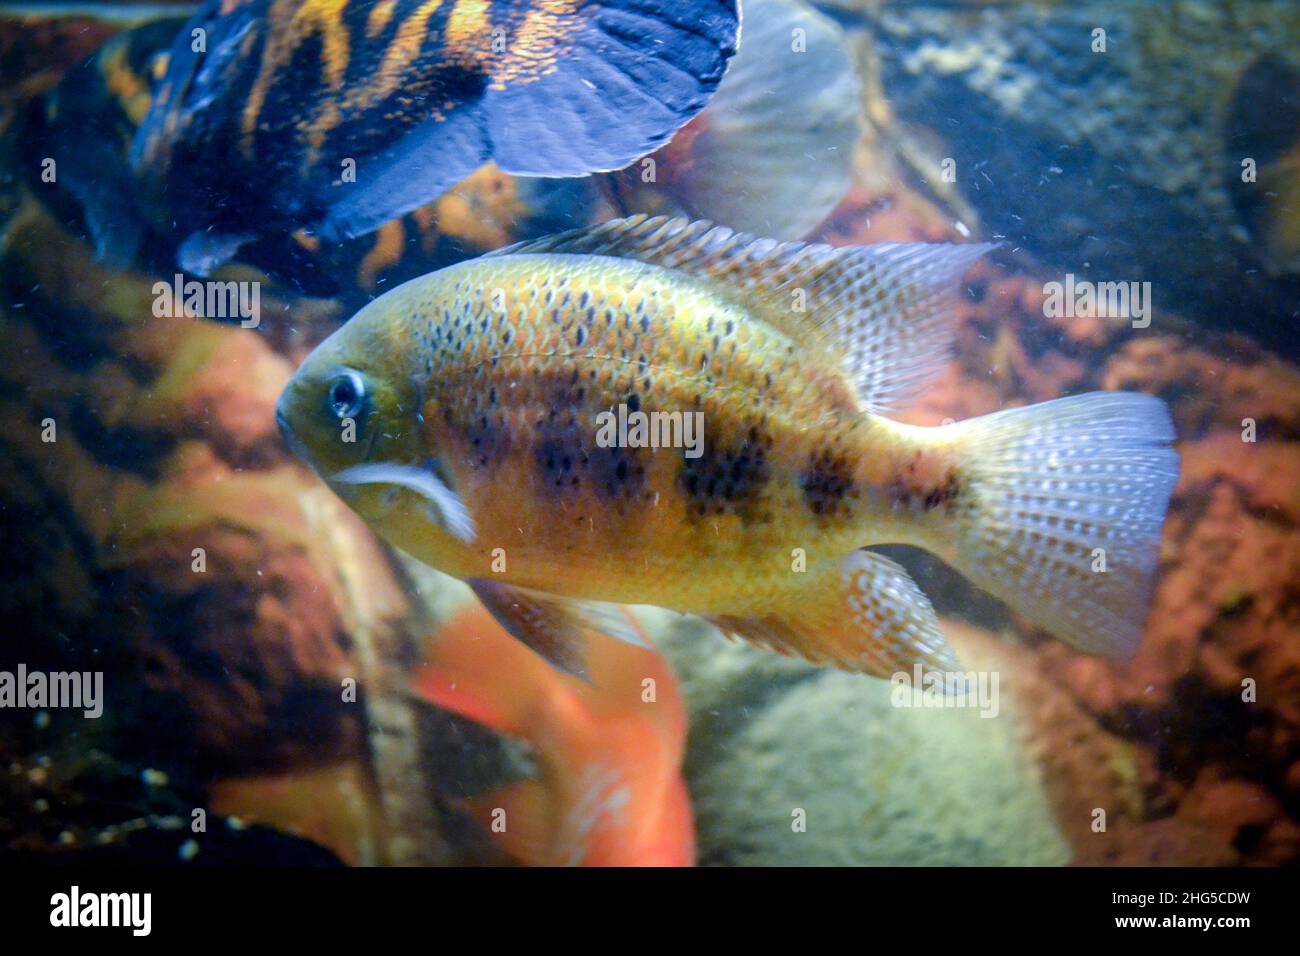 Astronotus ocellatus fish swimming underwater Stock Photo